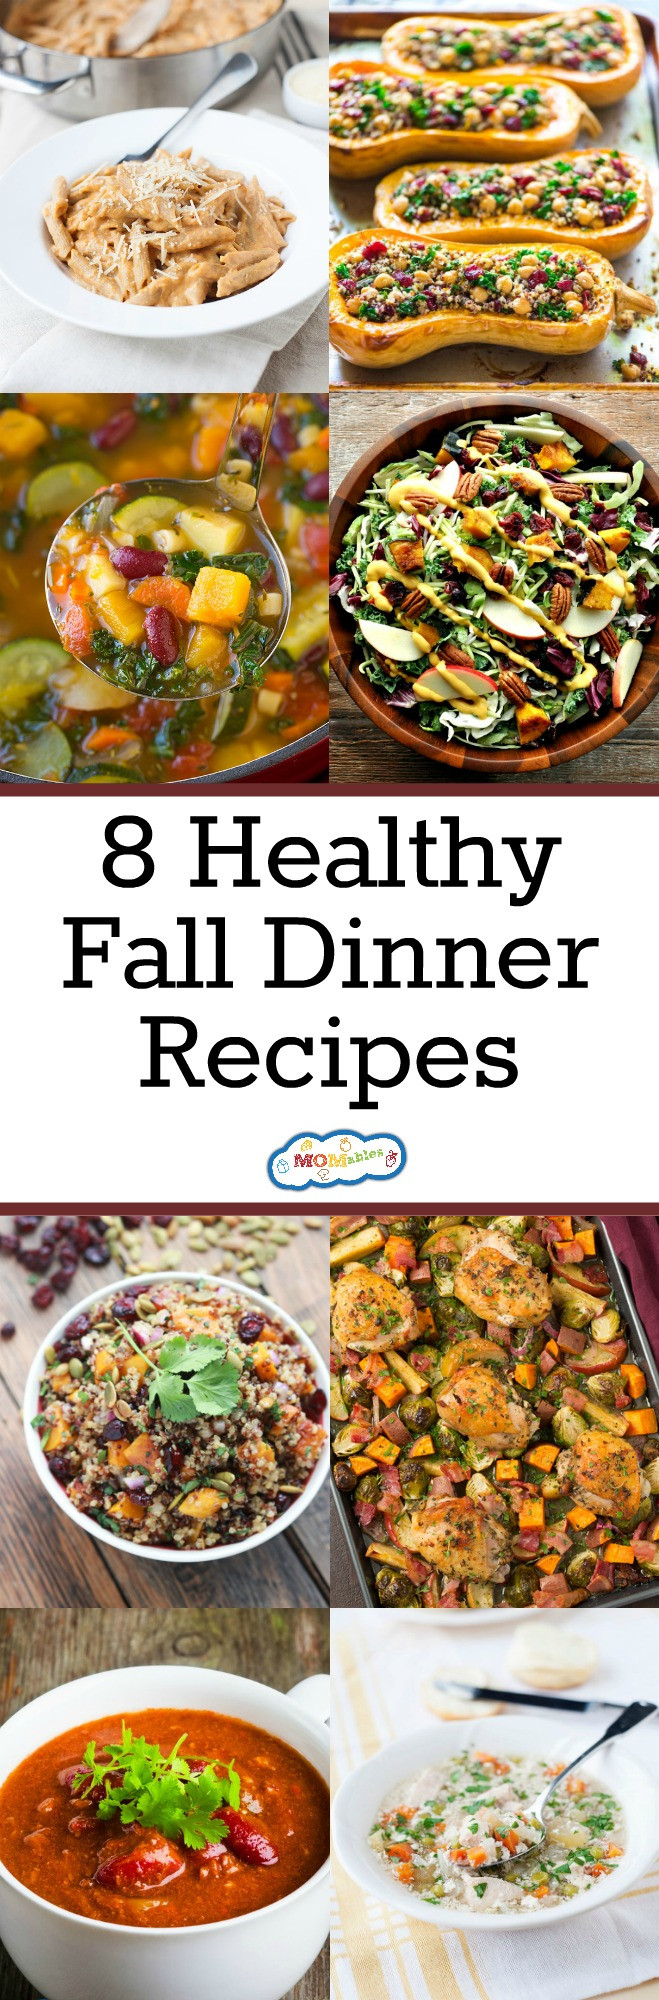 Fall Dinner Ideas
 8 Healthy Fall Dinner Recipes MOMables Good Food